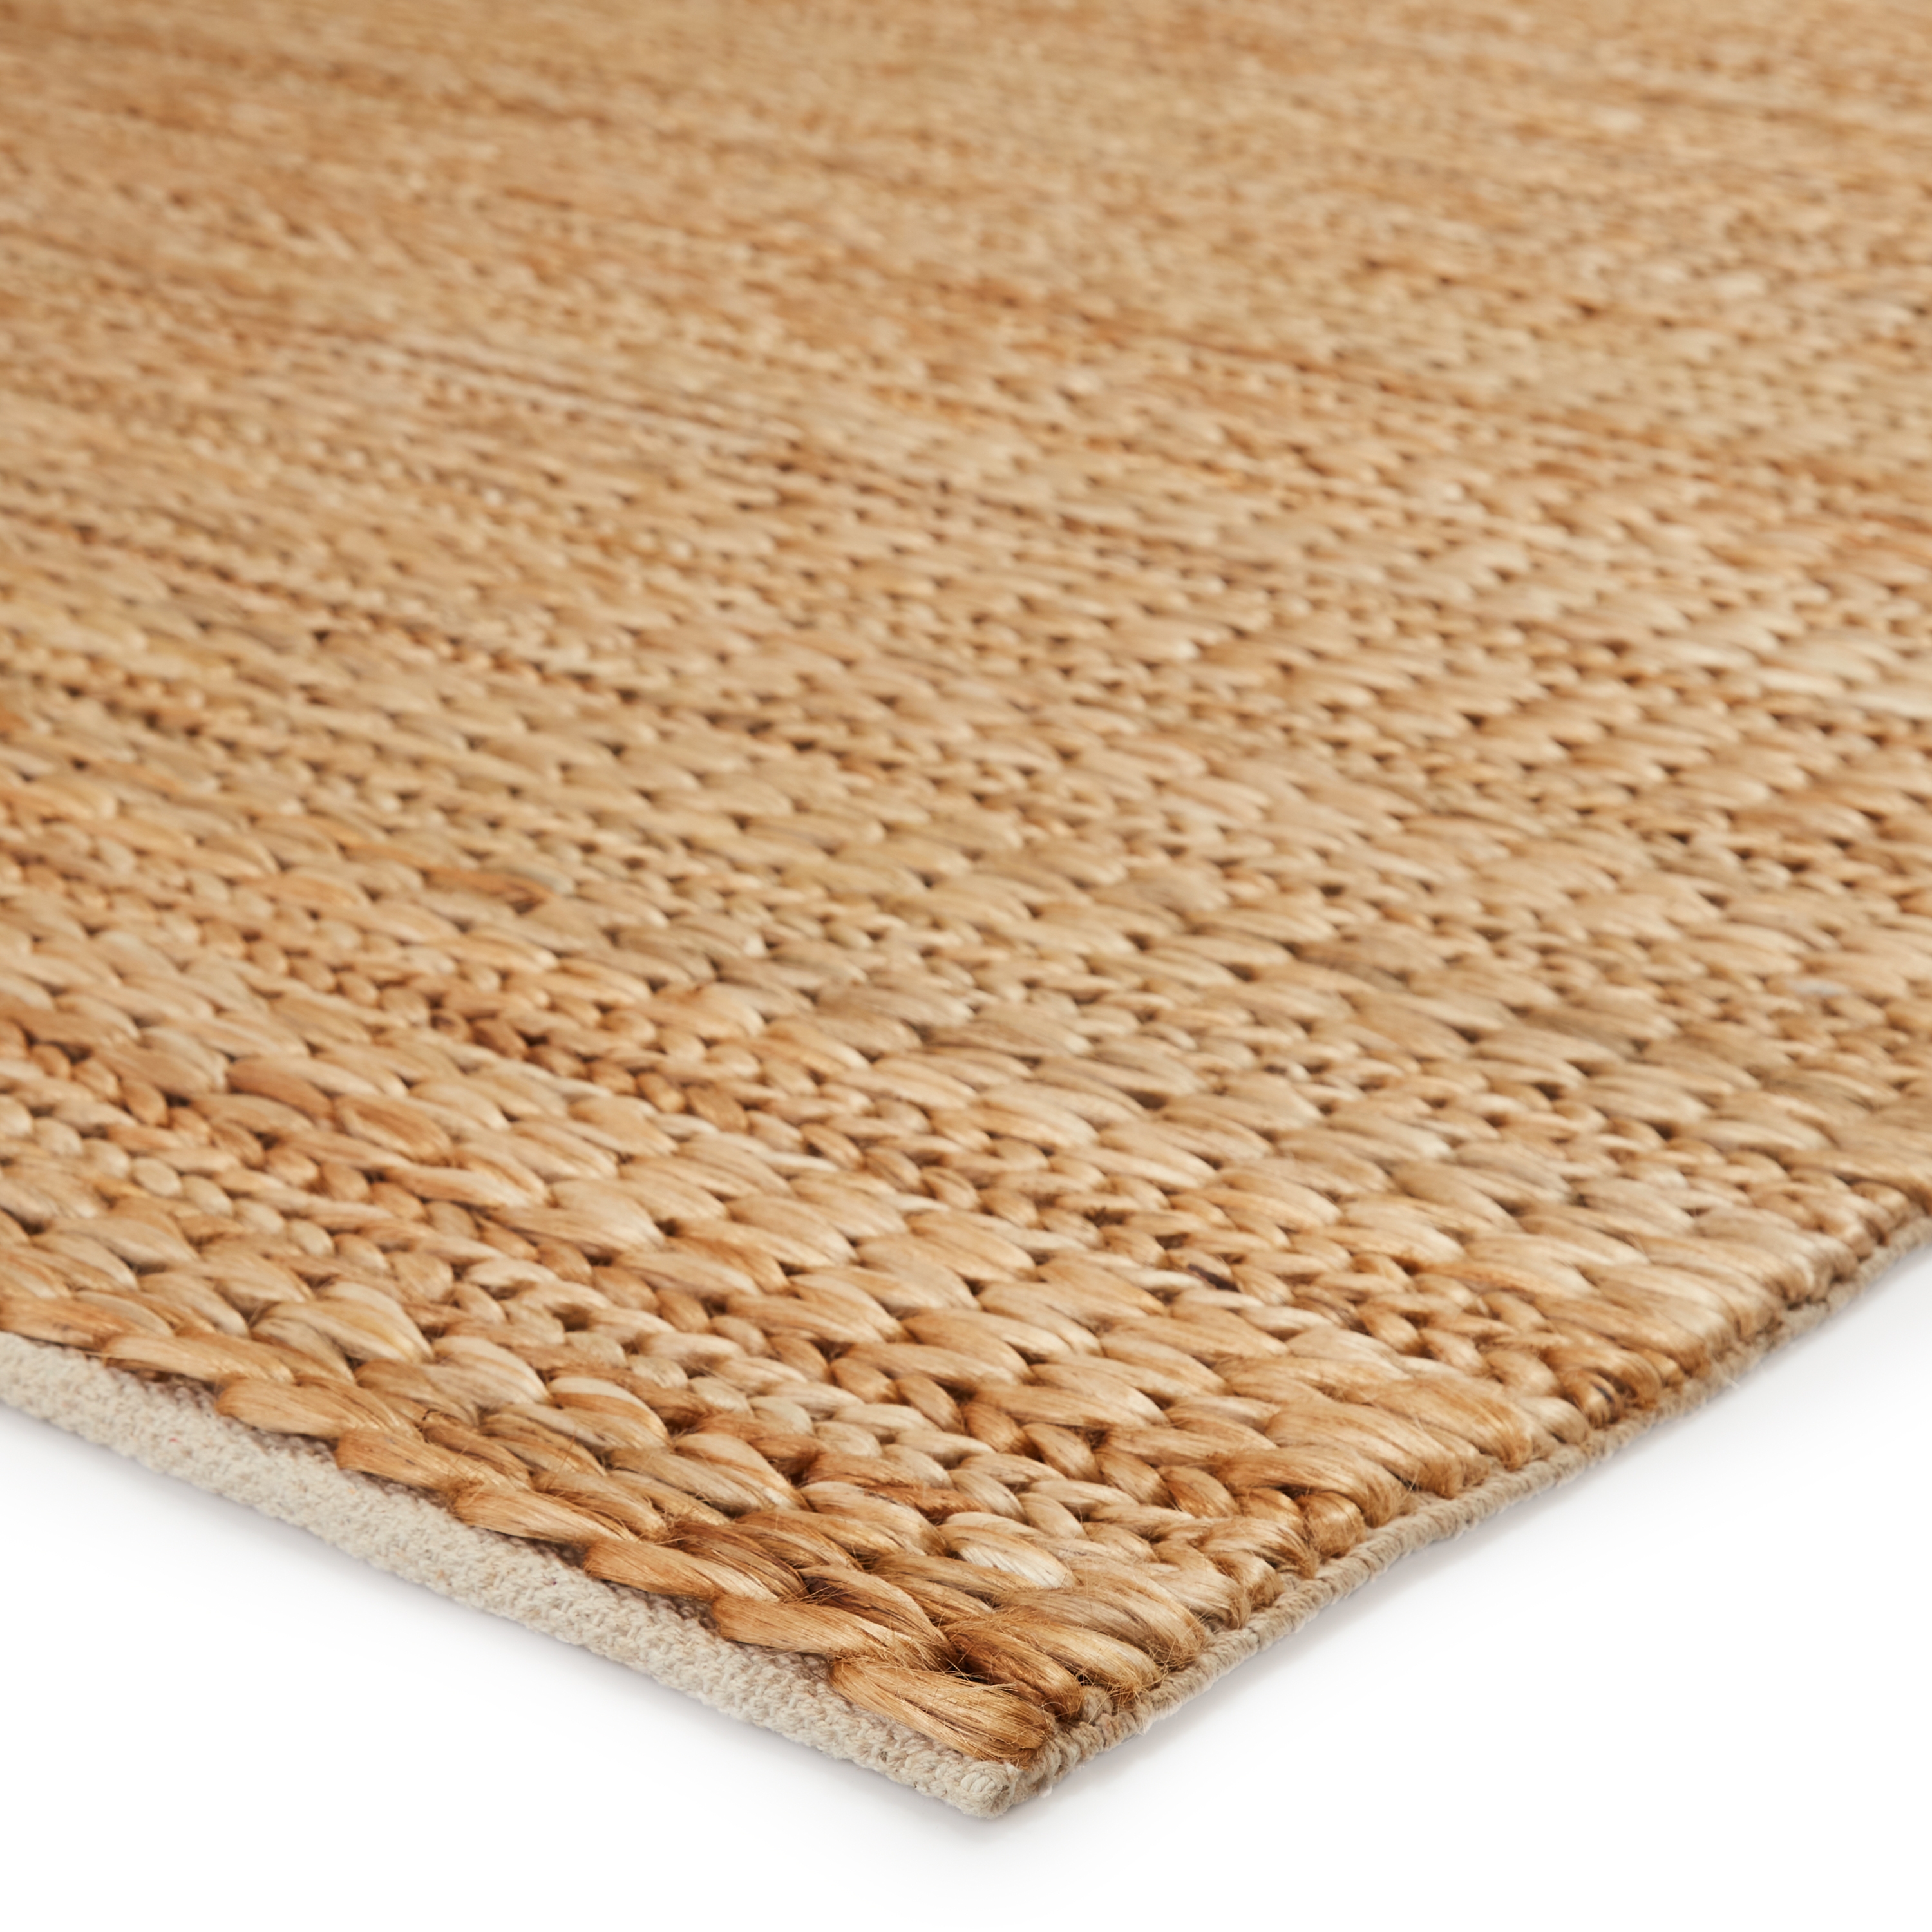 Poncy Natural Solid Tan Area Rug (8'X10') - Image 1